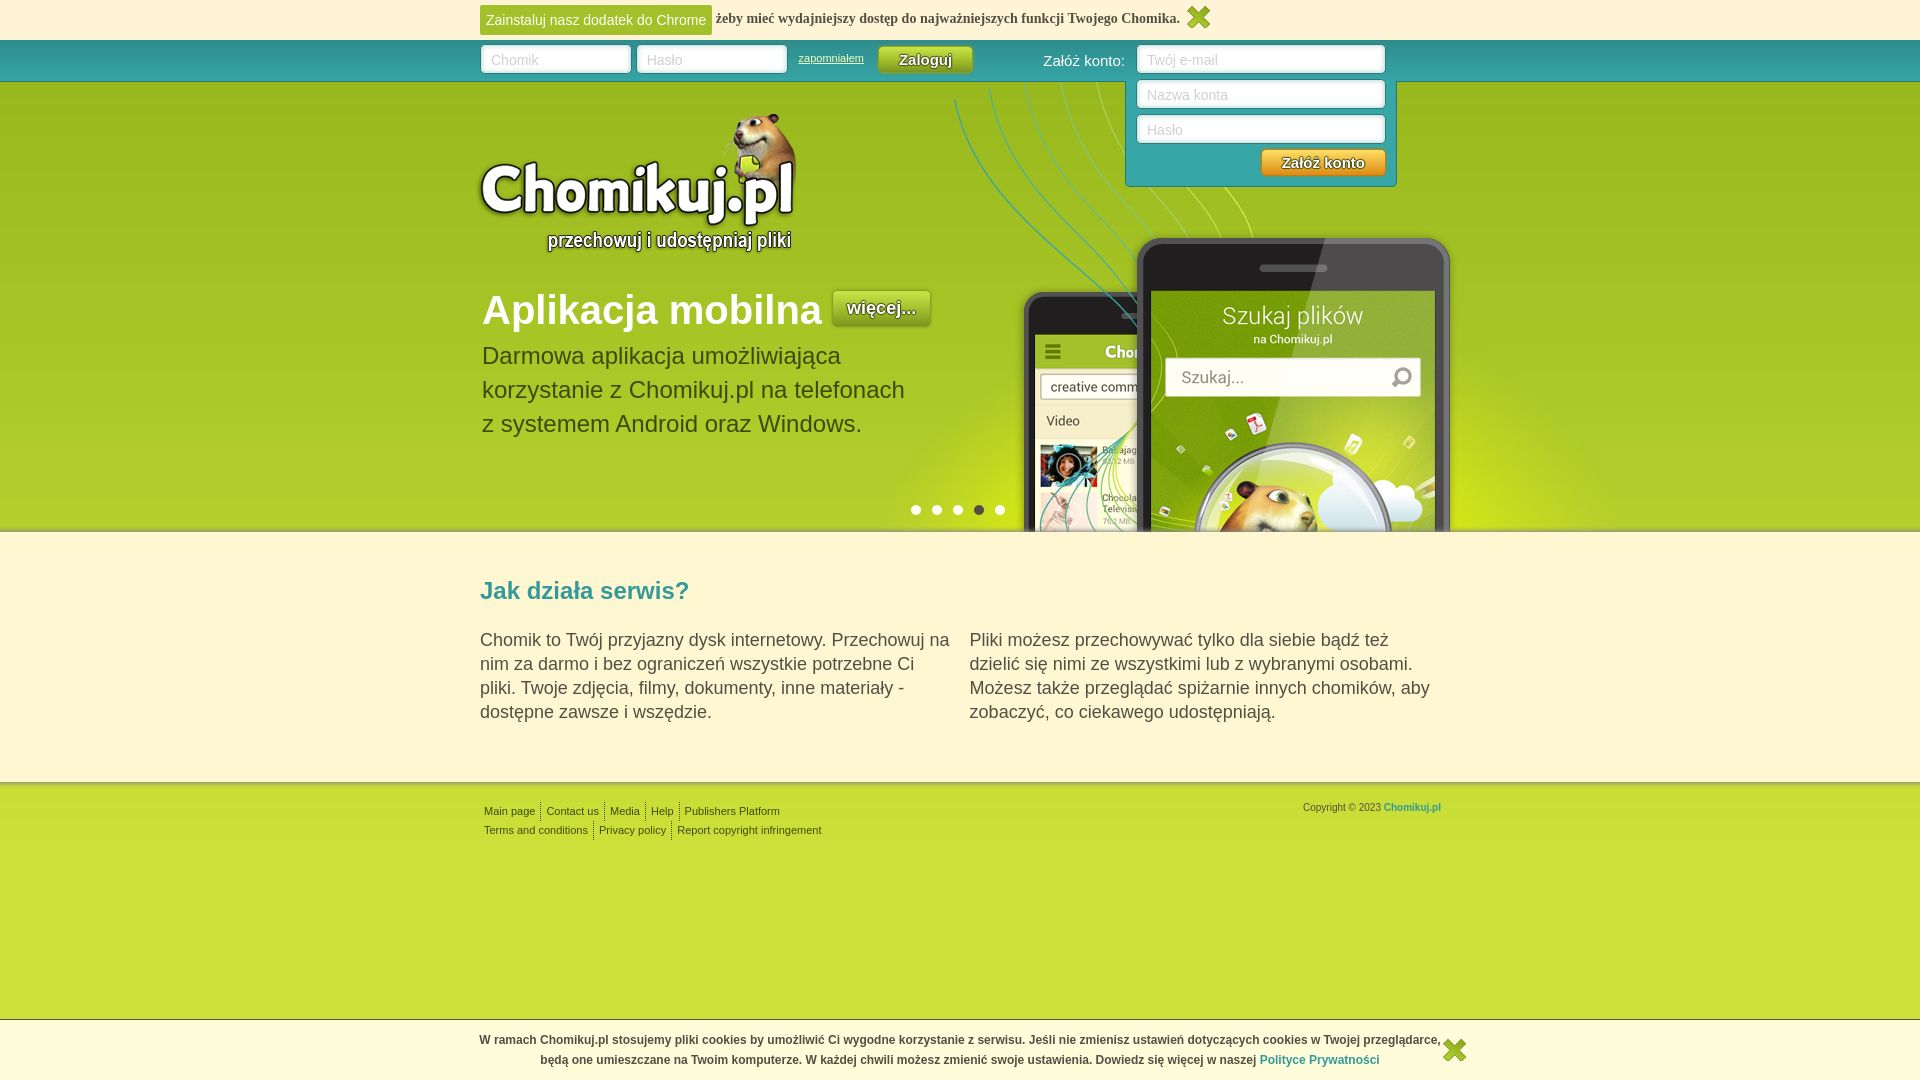 Status do site chomikuj.pl está   ONLINE